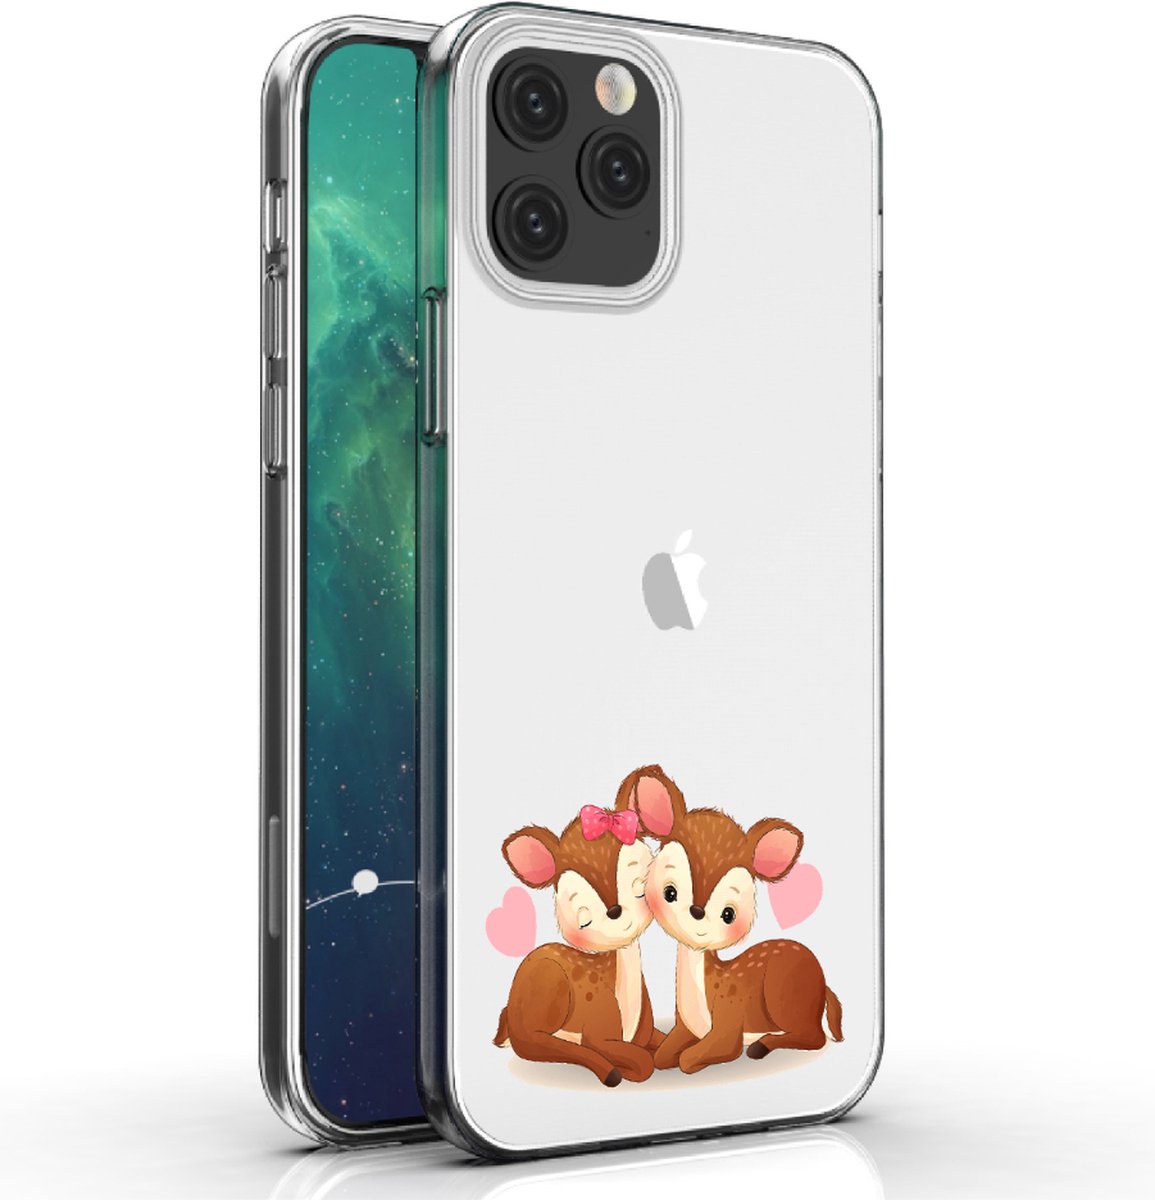 Apple Iphone 12 Pro Max telefoonhoesje transparant siliconen hoesje - Hertjes